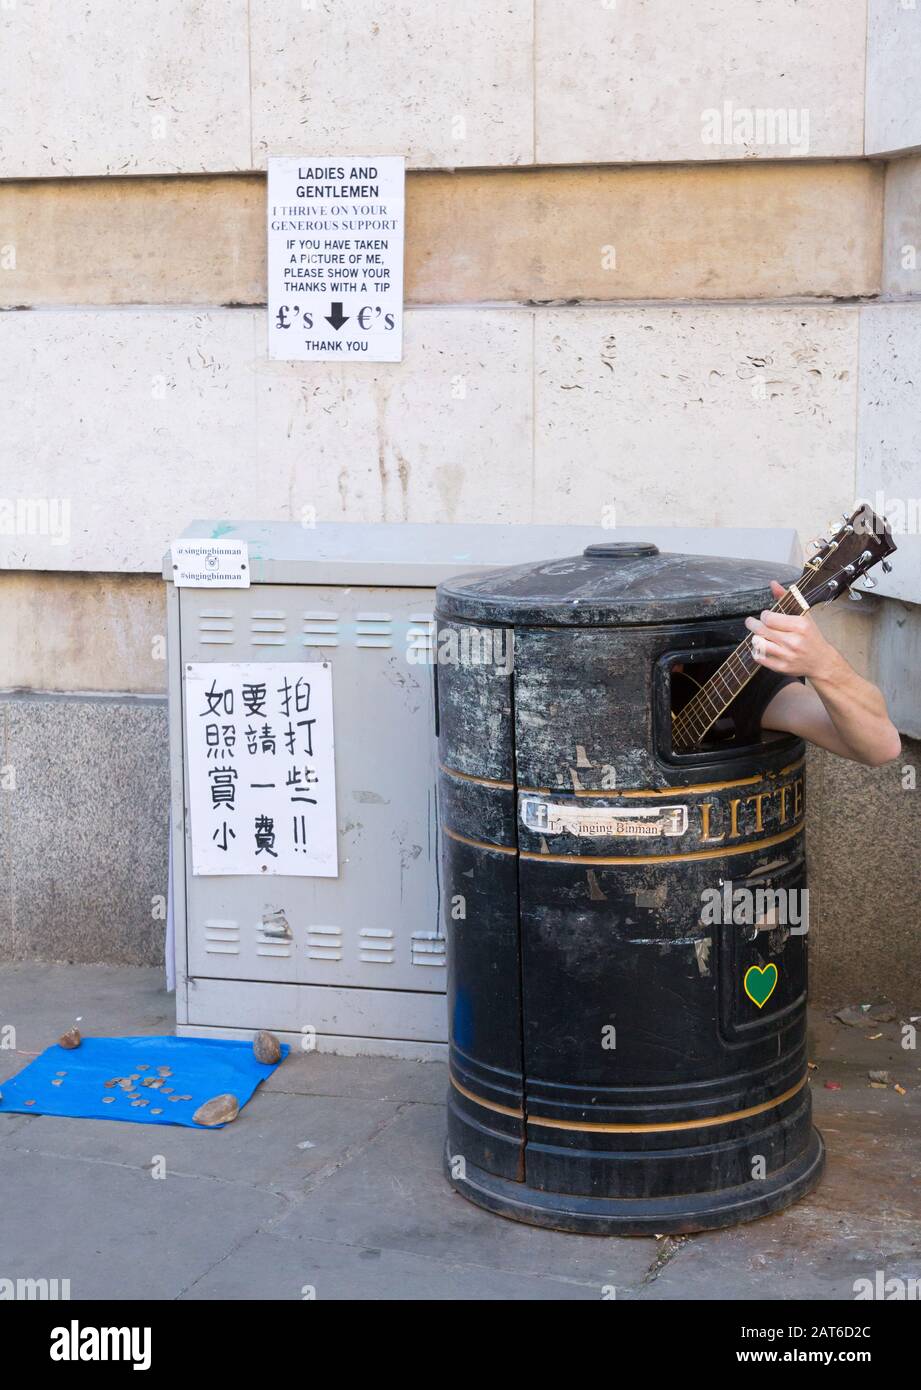 Street busker hiding in rubbish bin playing a guitar, in Cambridge, UK Stock Photo